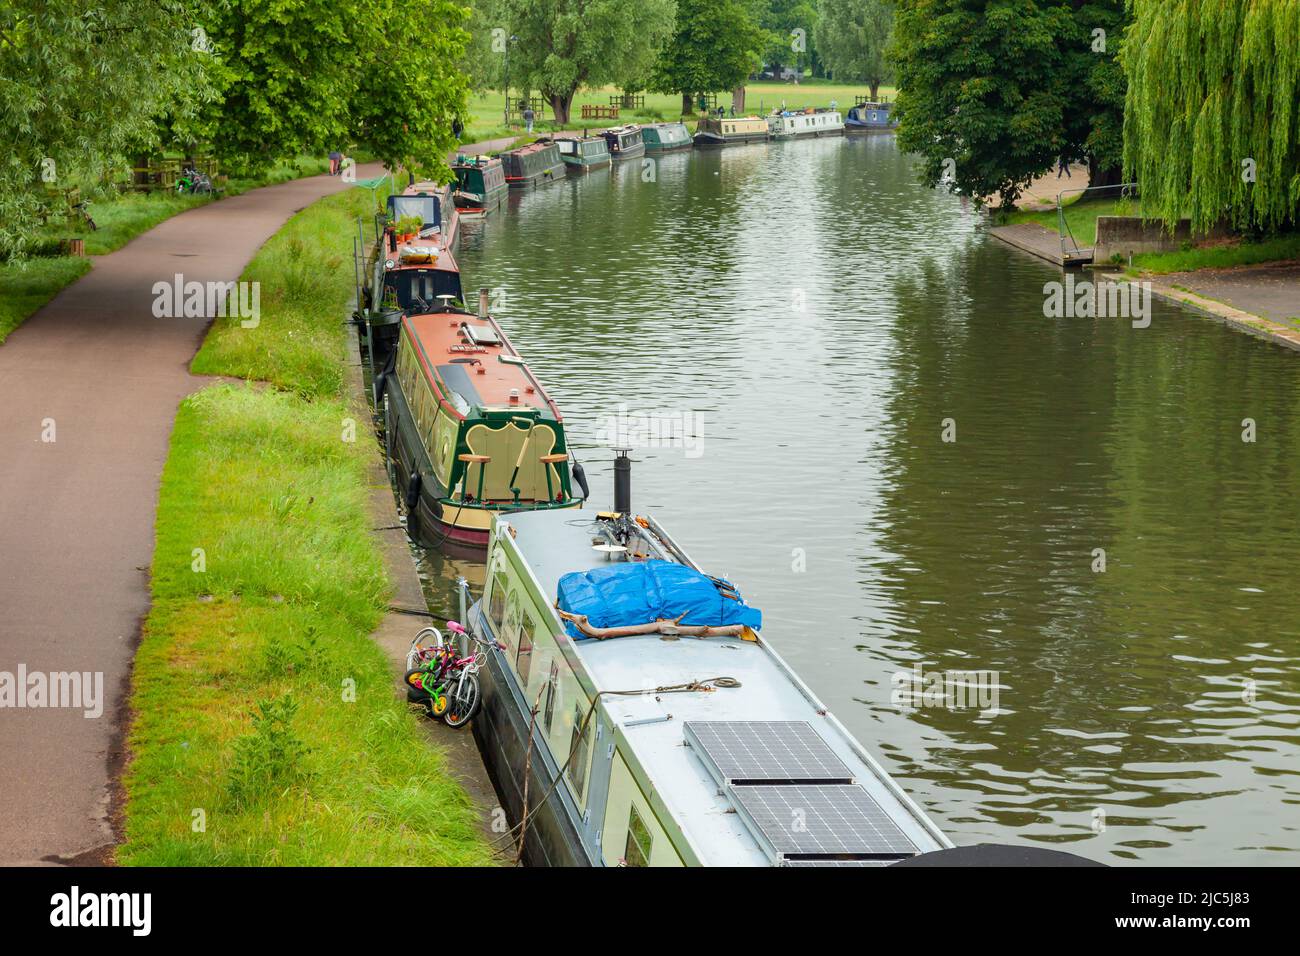 Case galleggianti sul fiume Cam a Cambridge, Inghilterra. Foto Stock